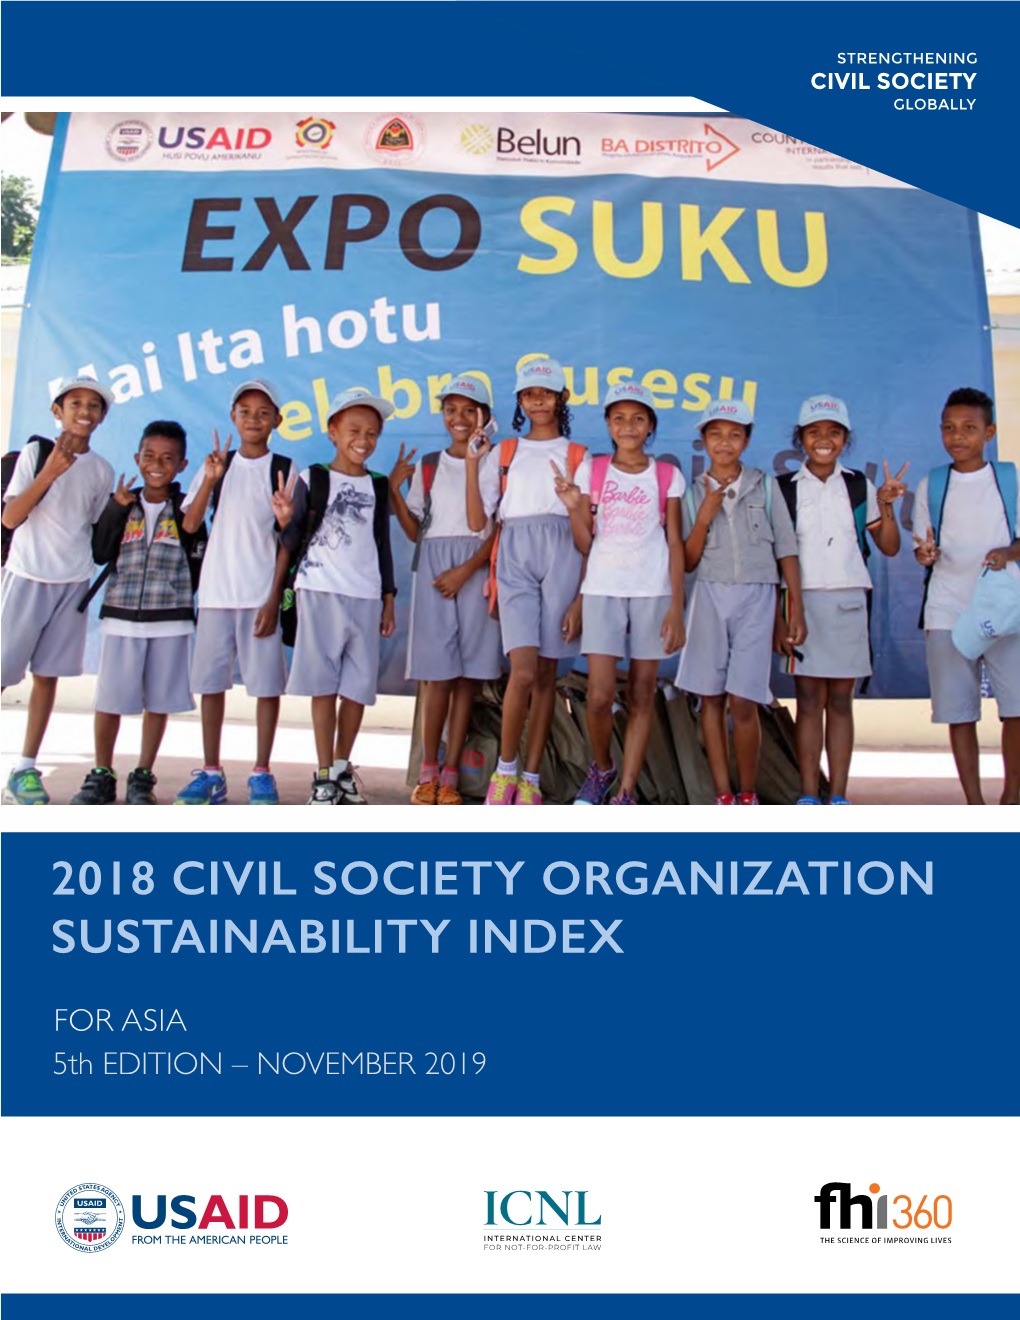 2018 Civil Society Organization Sustainability Index for Asia